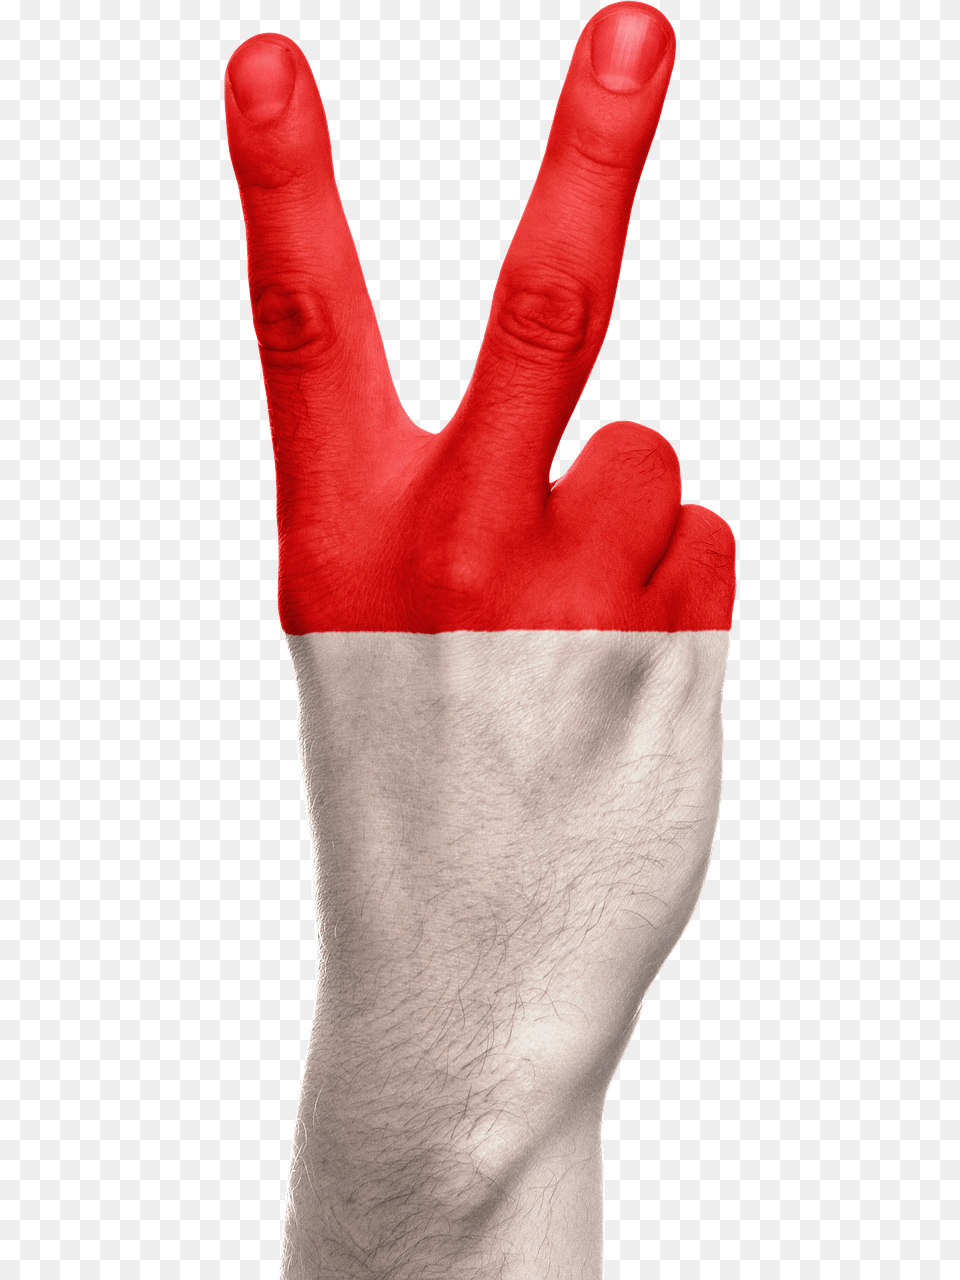 Indonesia Flag Hand Gambar Tangan Bendera Indonesia, Body Part, Clothing, Finger, Glove Png Image